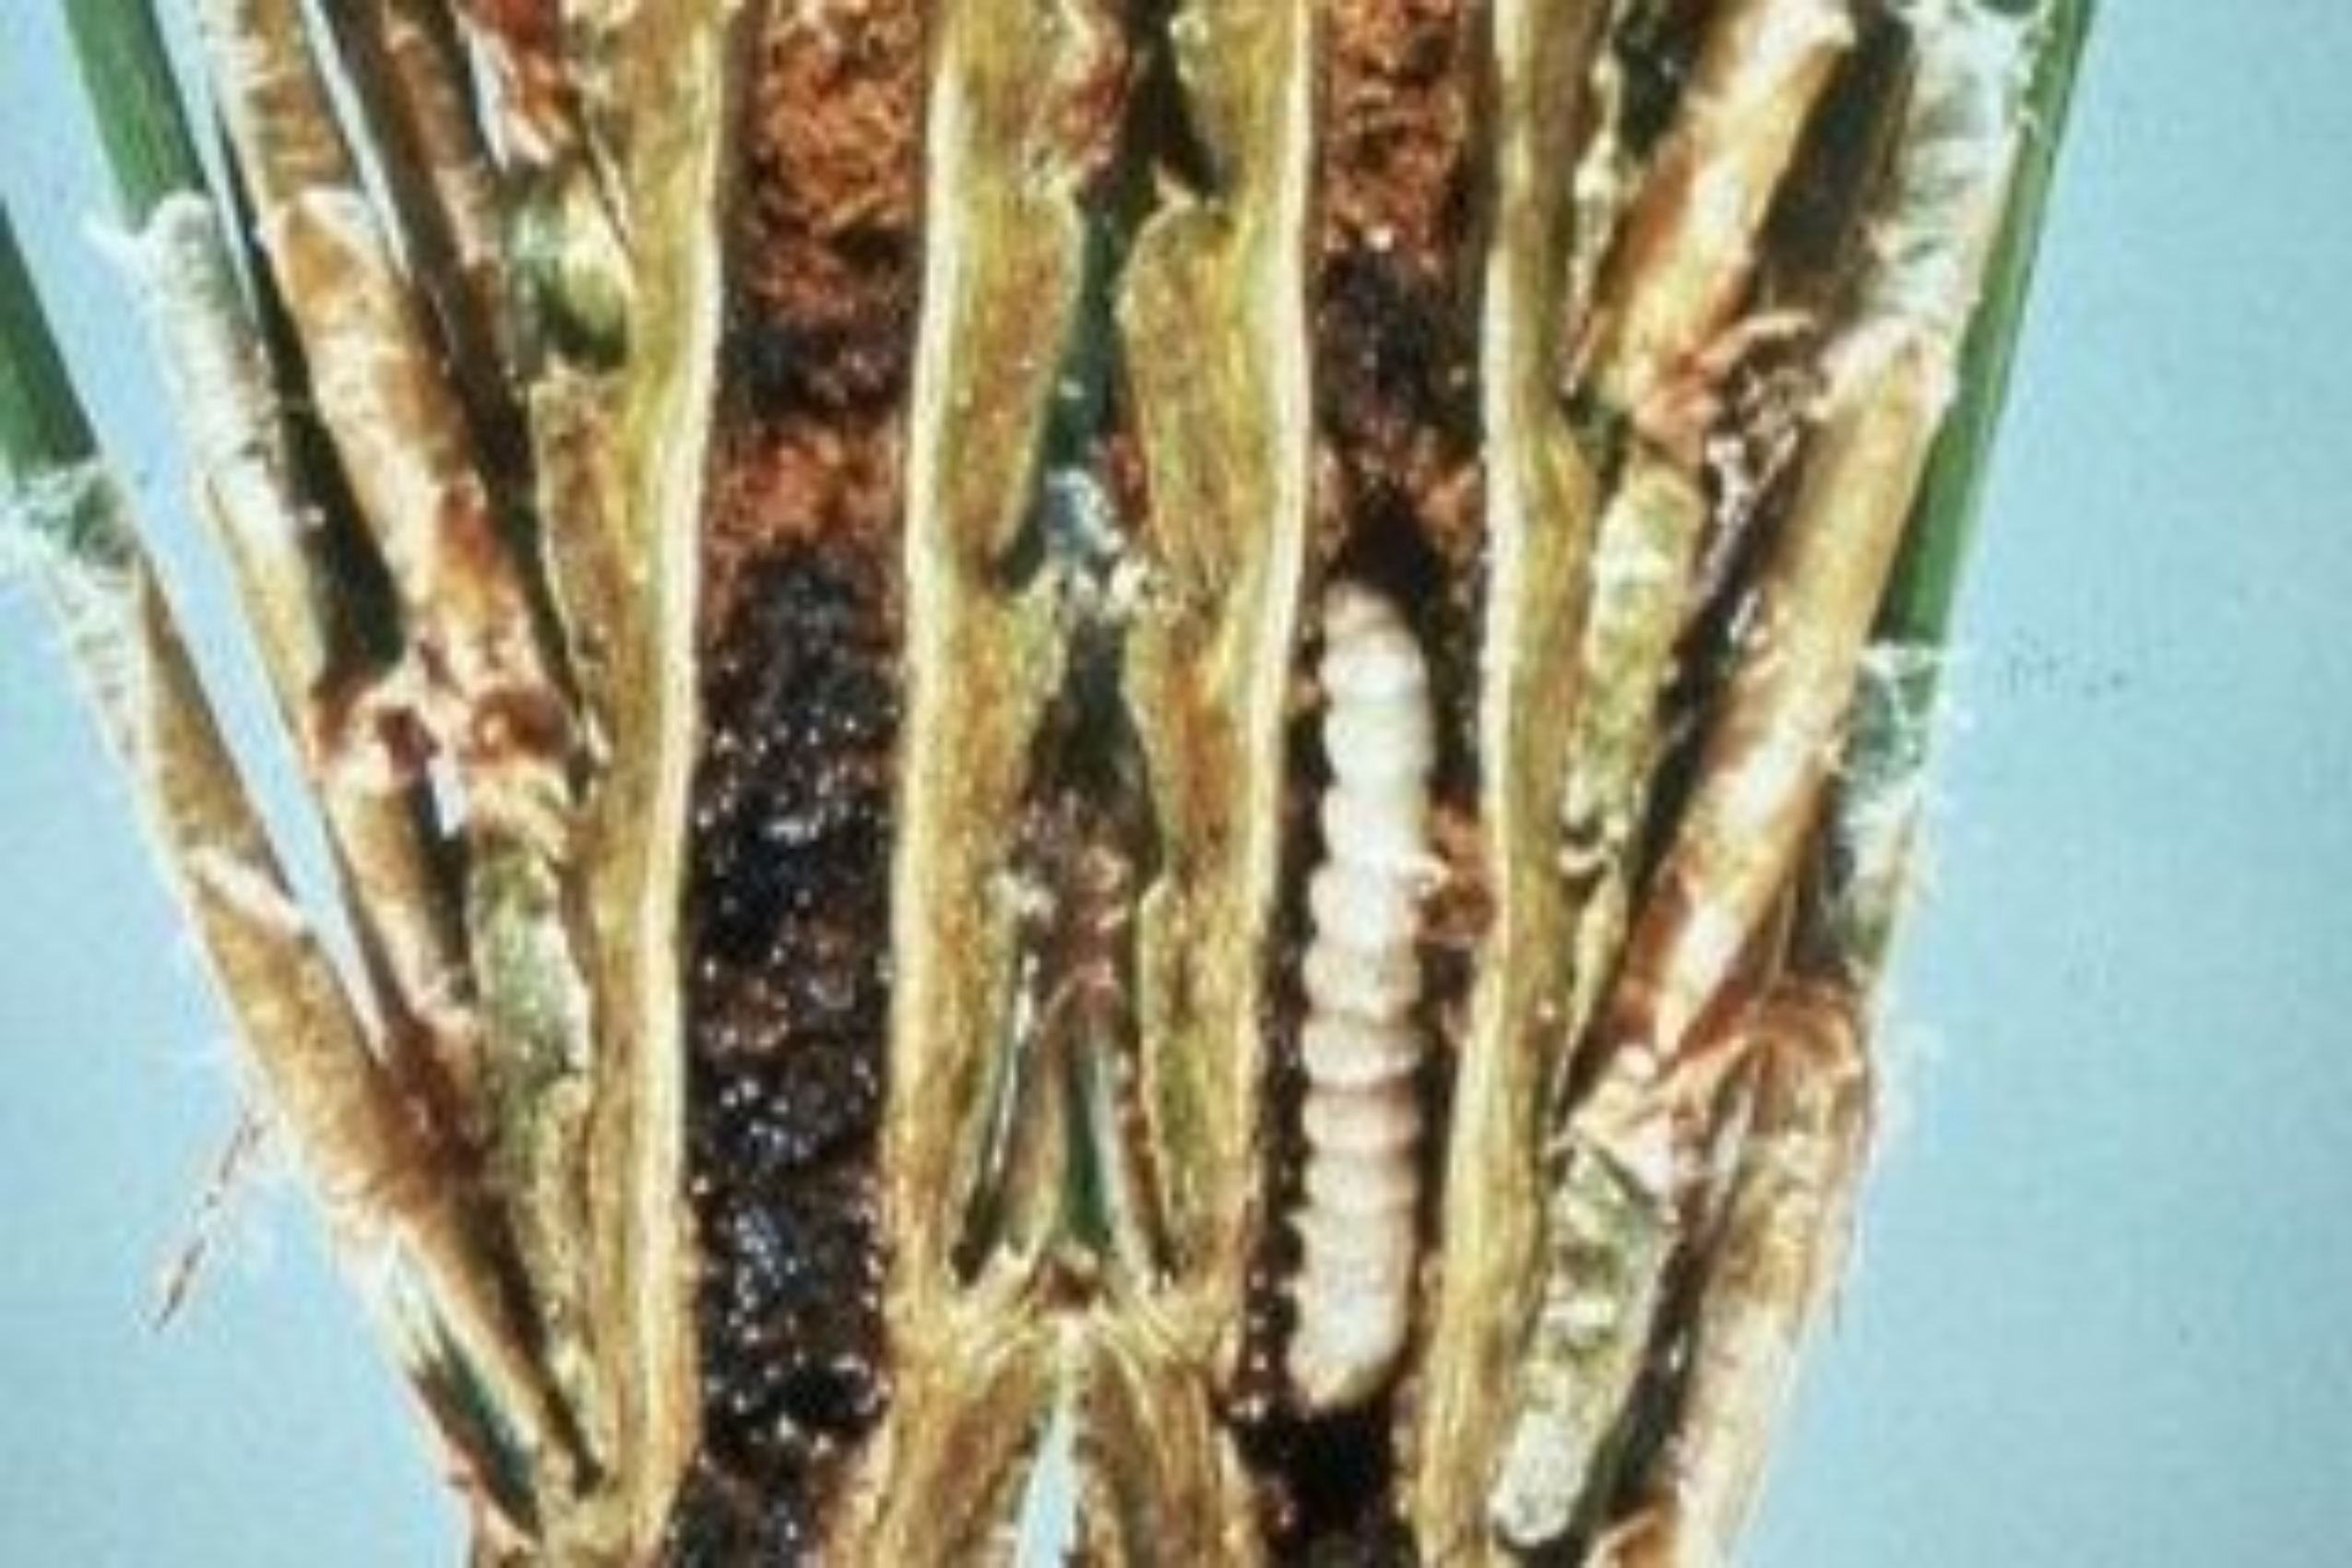 Larva feeding on a pine shoot borer